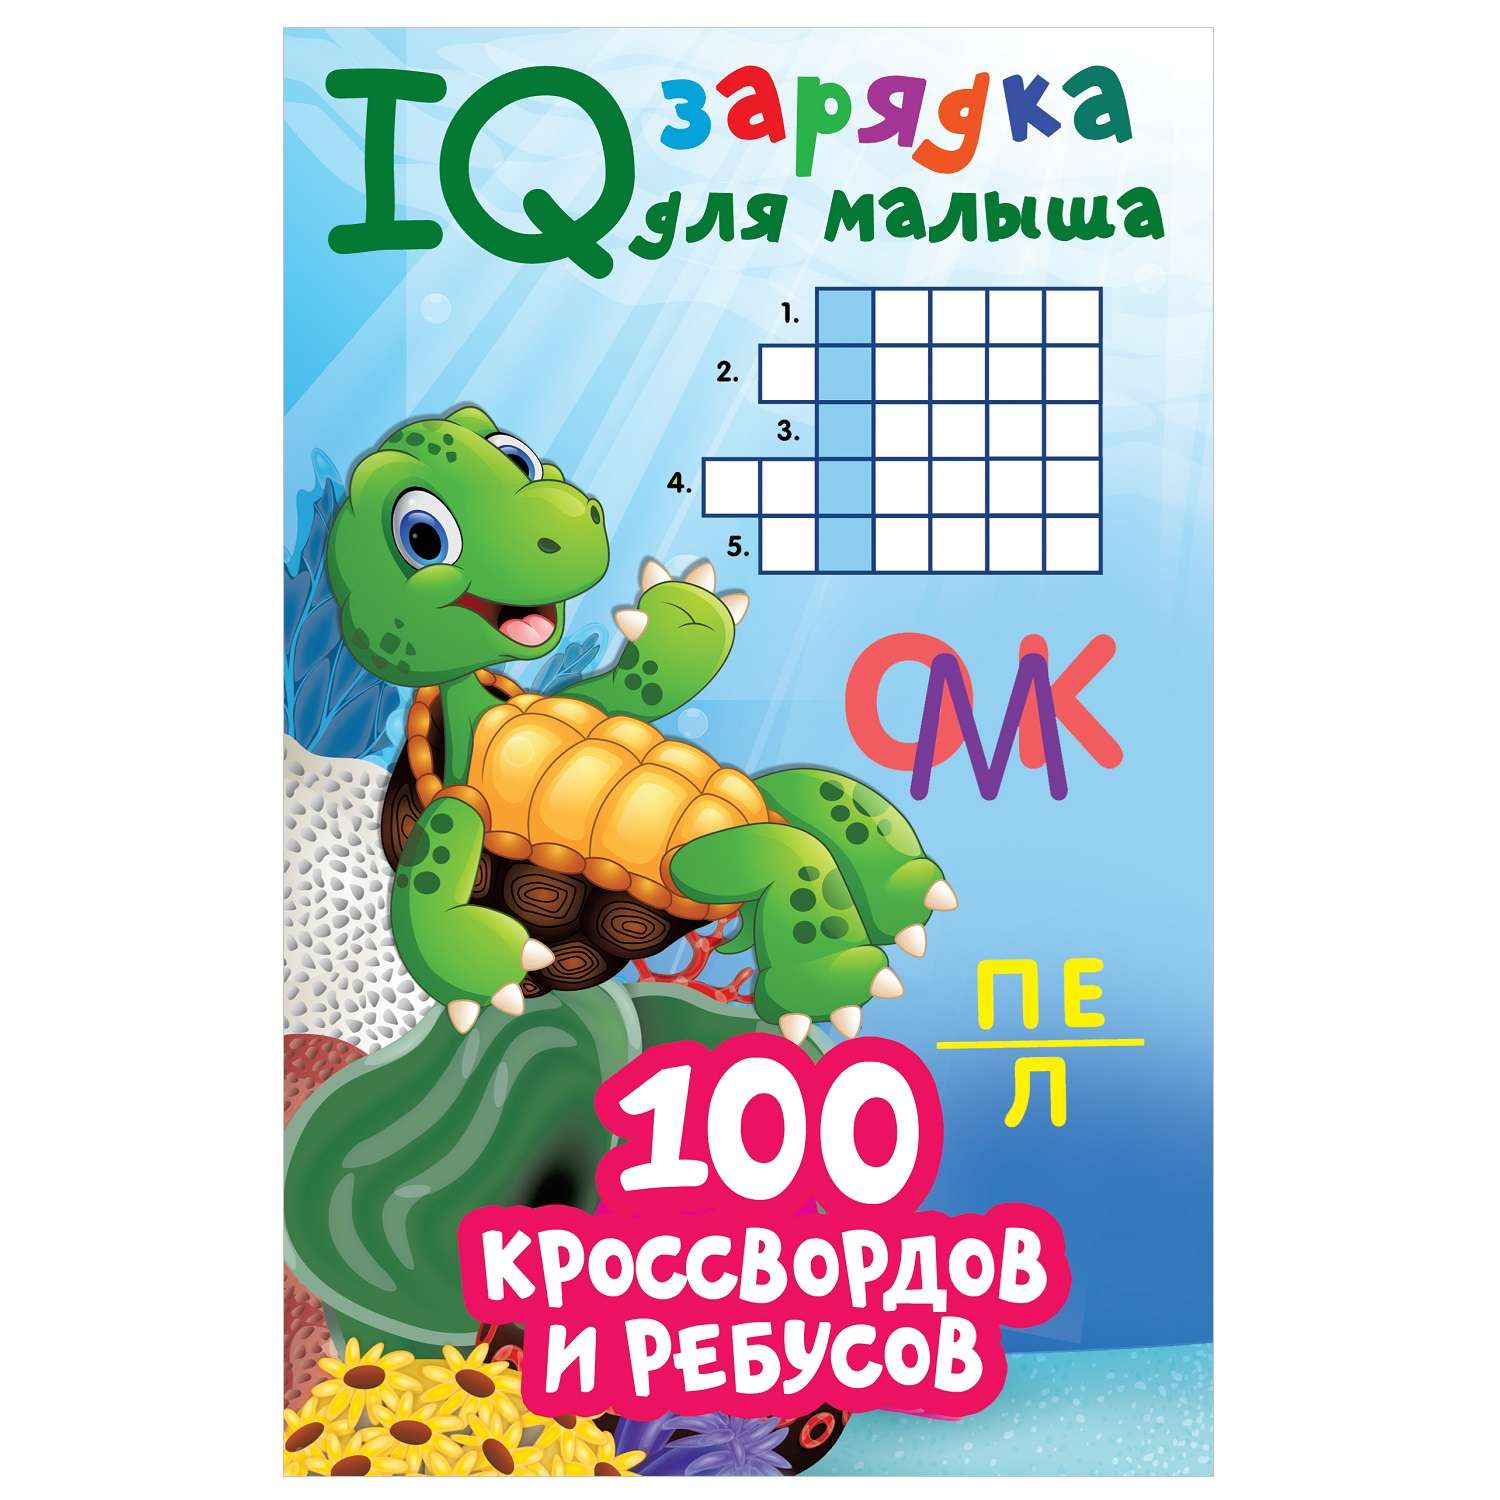 Книга АСТ IQ зарядка для малыша 100 кроссвордов и ребусов - фото 1